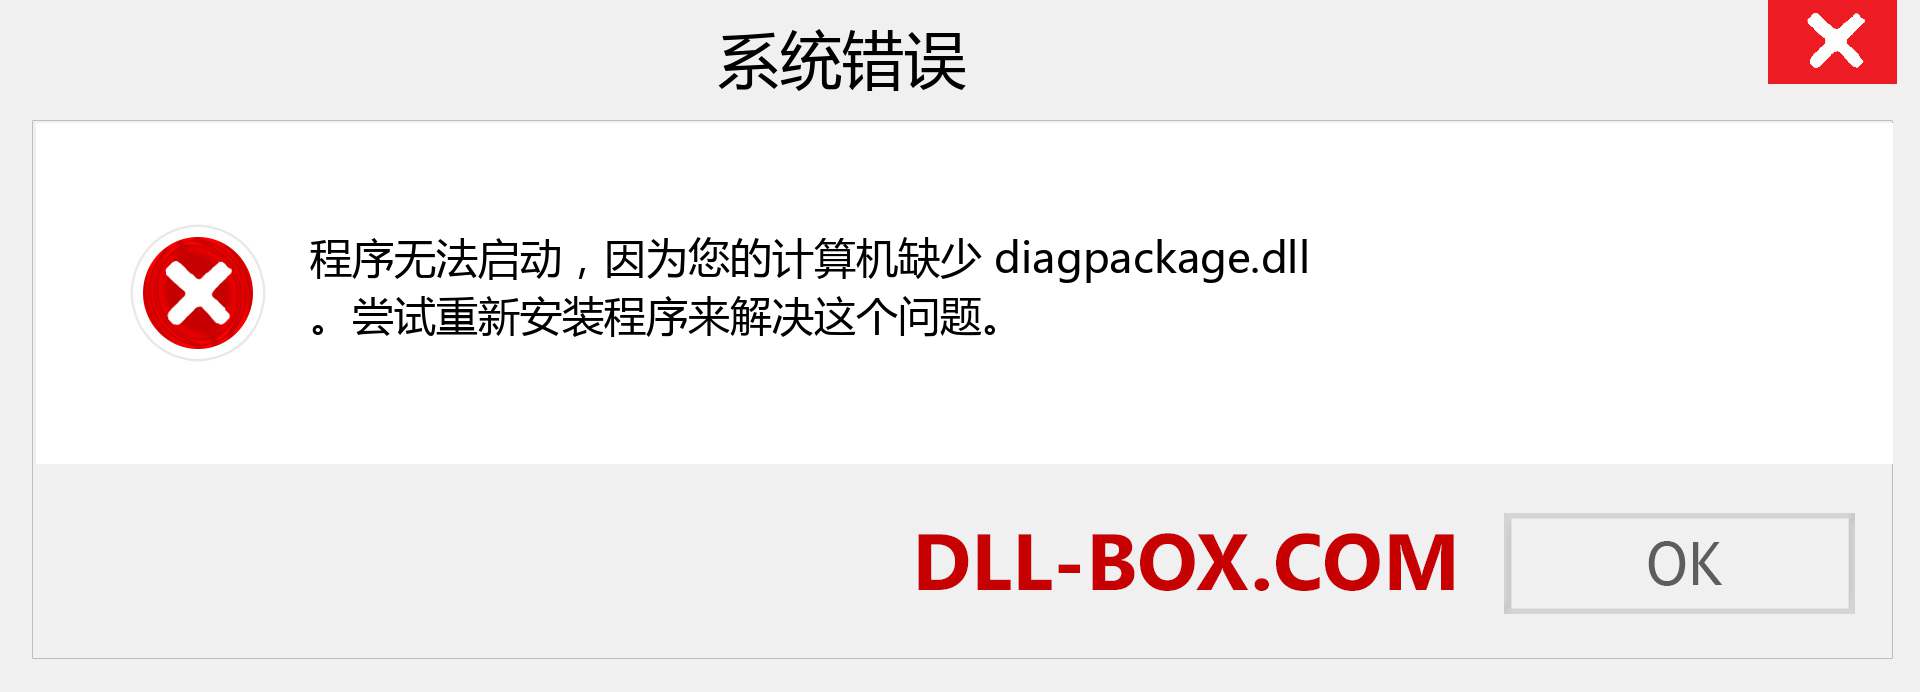 diagpackage.dll 文件丢失？。 适用于 Windows 7、8、10 的下载 - 修复 Windows、照片、图像上的 diagpackage dll 丢失错误